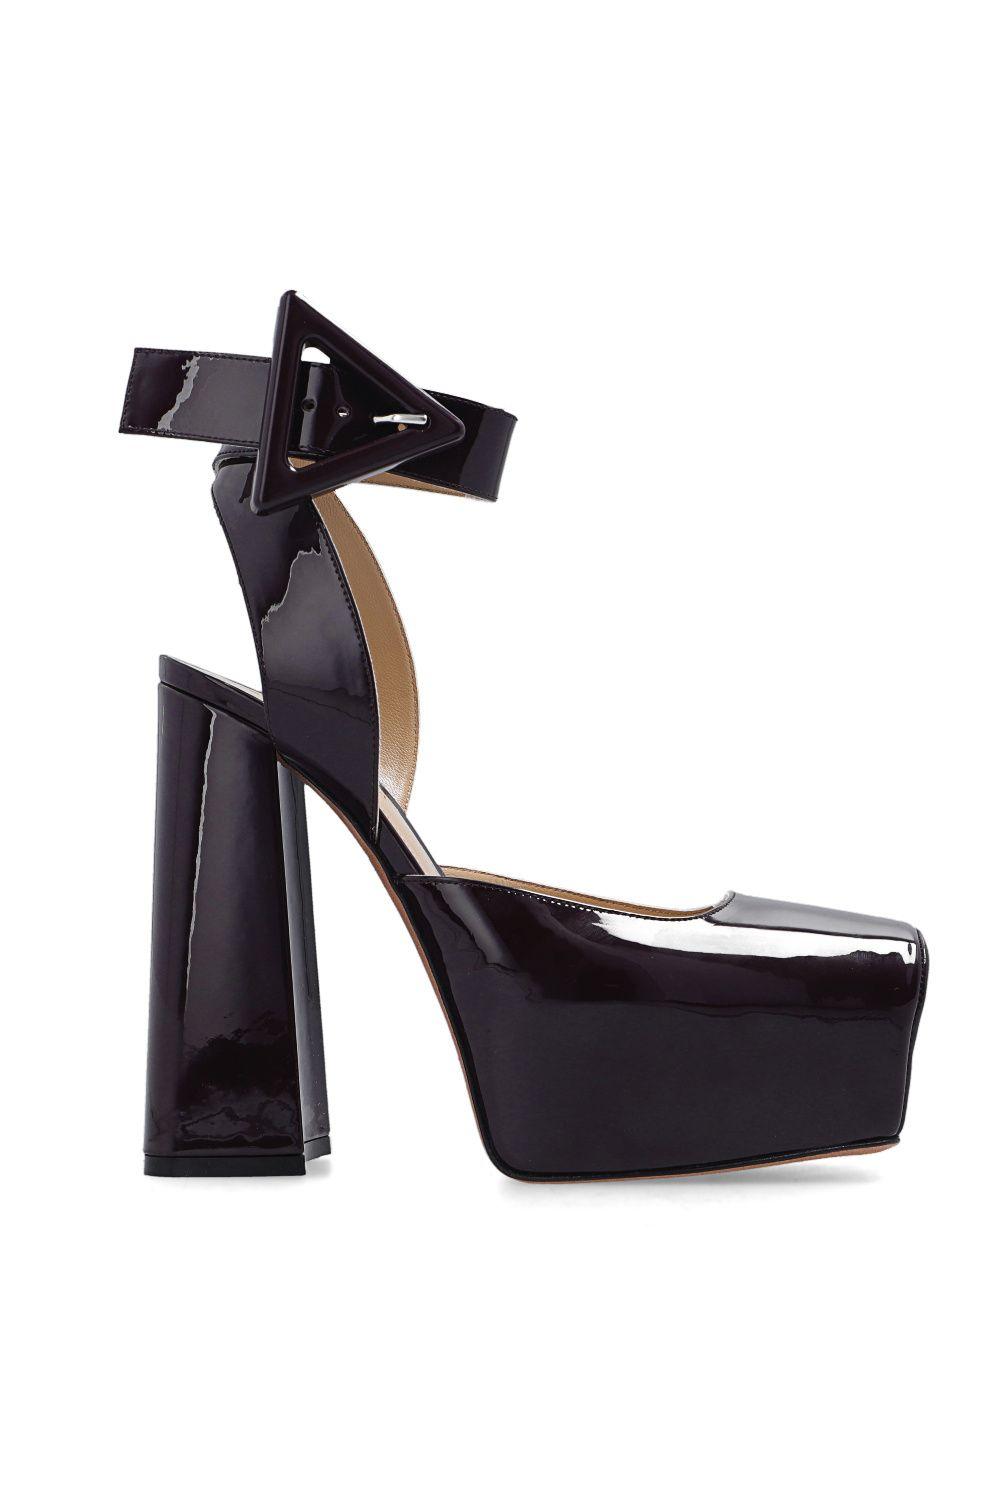 Bottega Veneta 'tower' Platform Shoes in Brown | Lyst